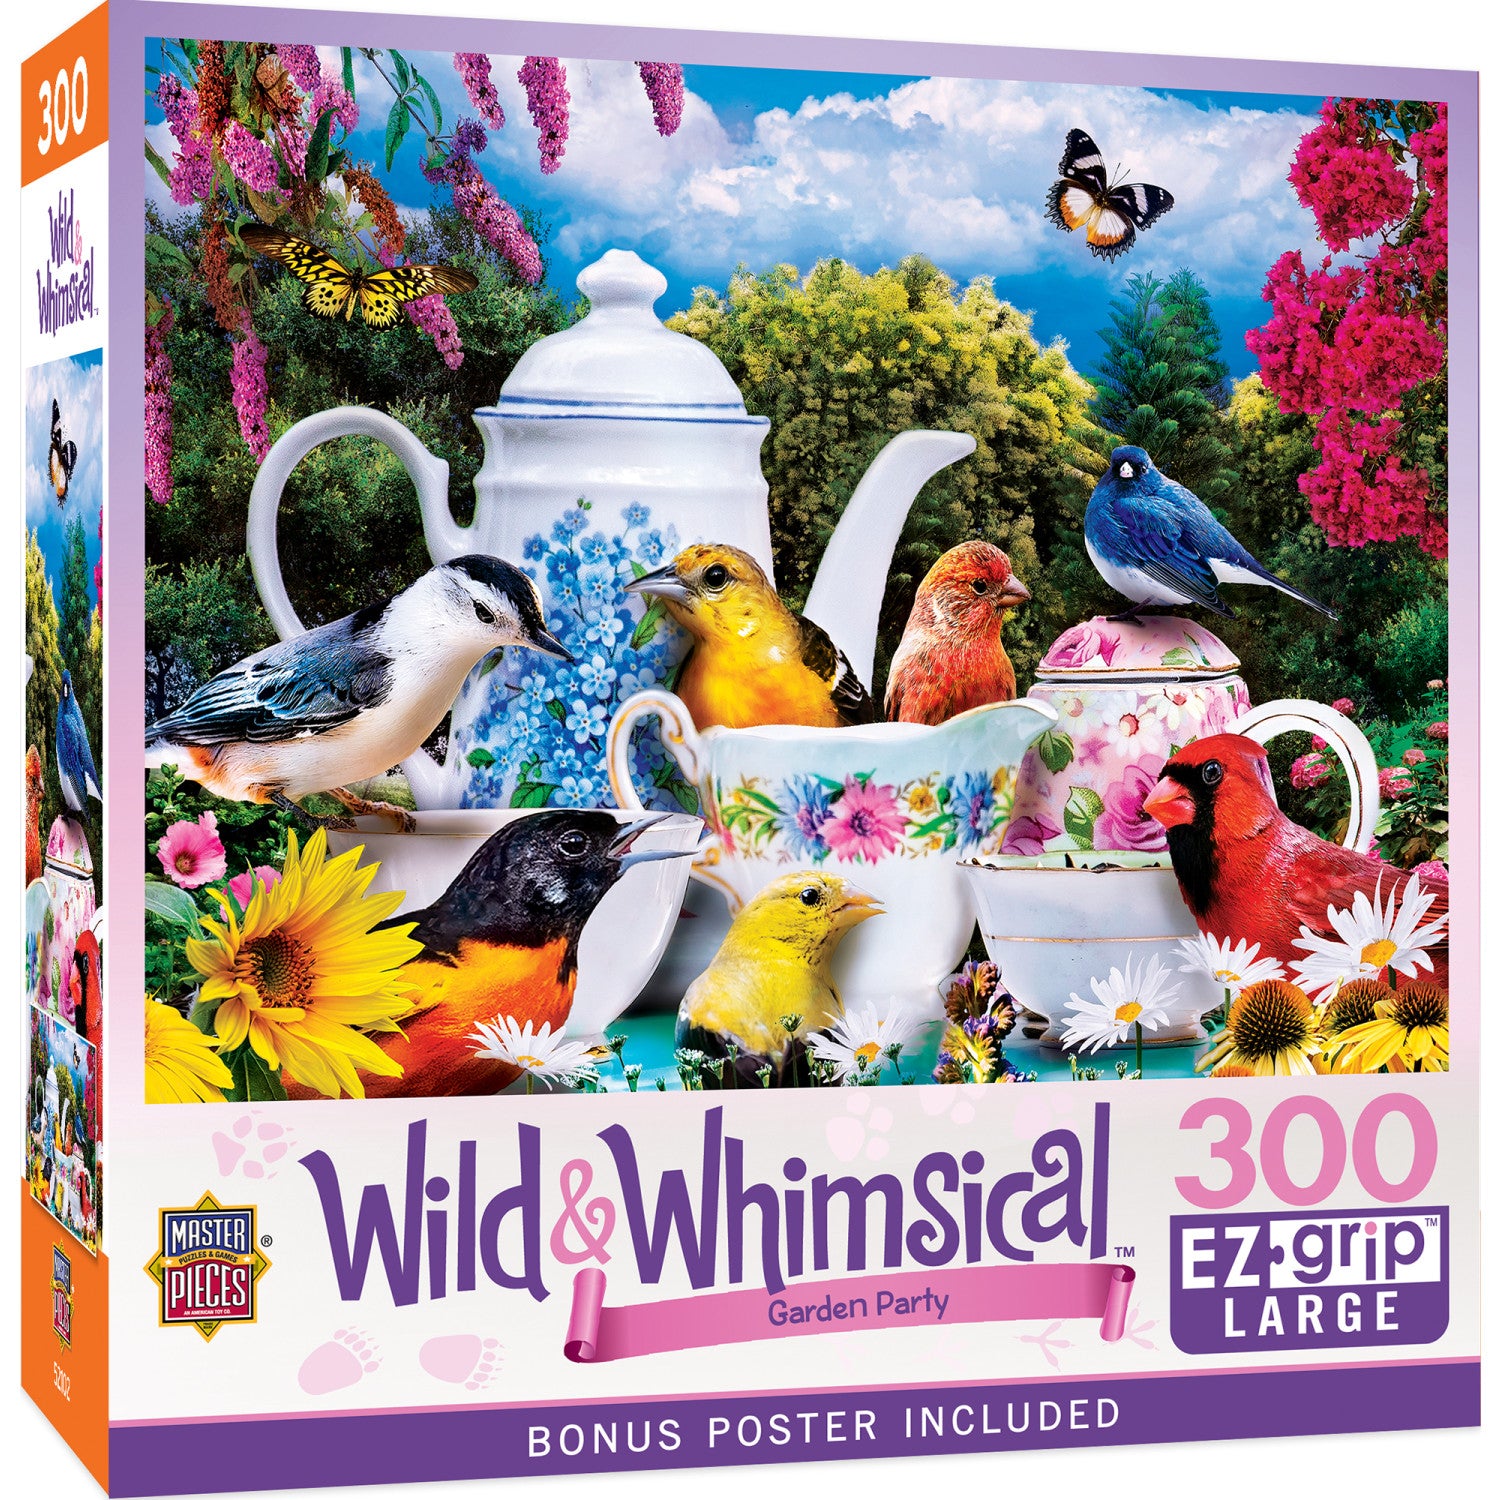 Wild & Whimsical - Garden Party 300 Piece EZ Grip Jigsaw Puzzle